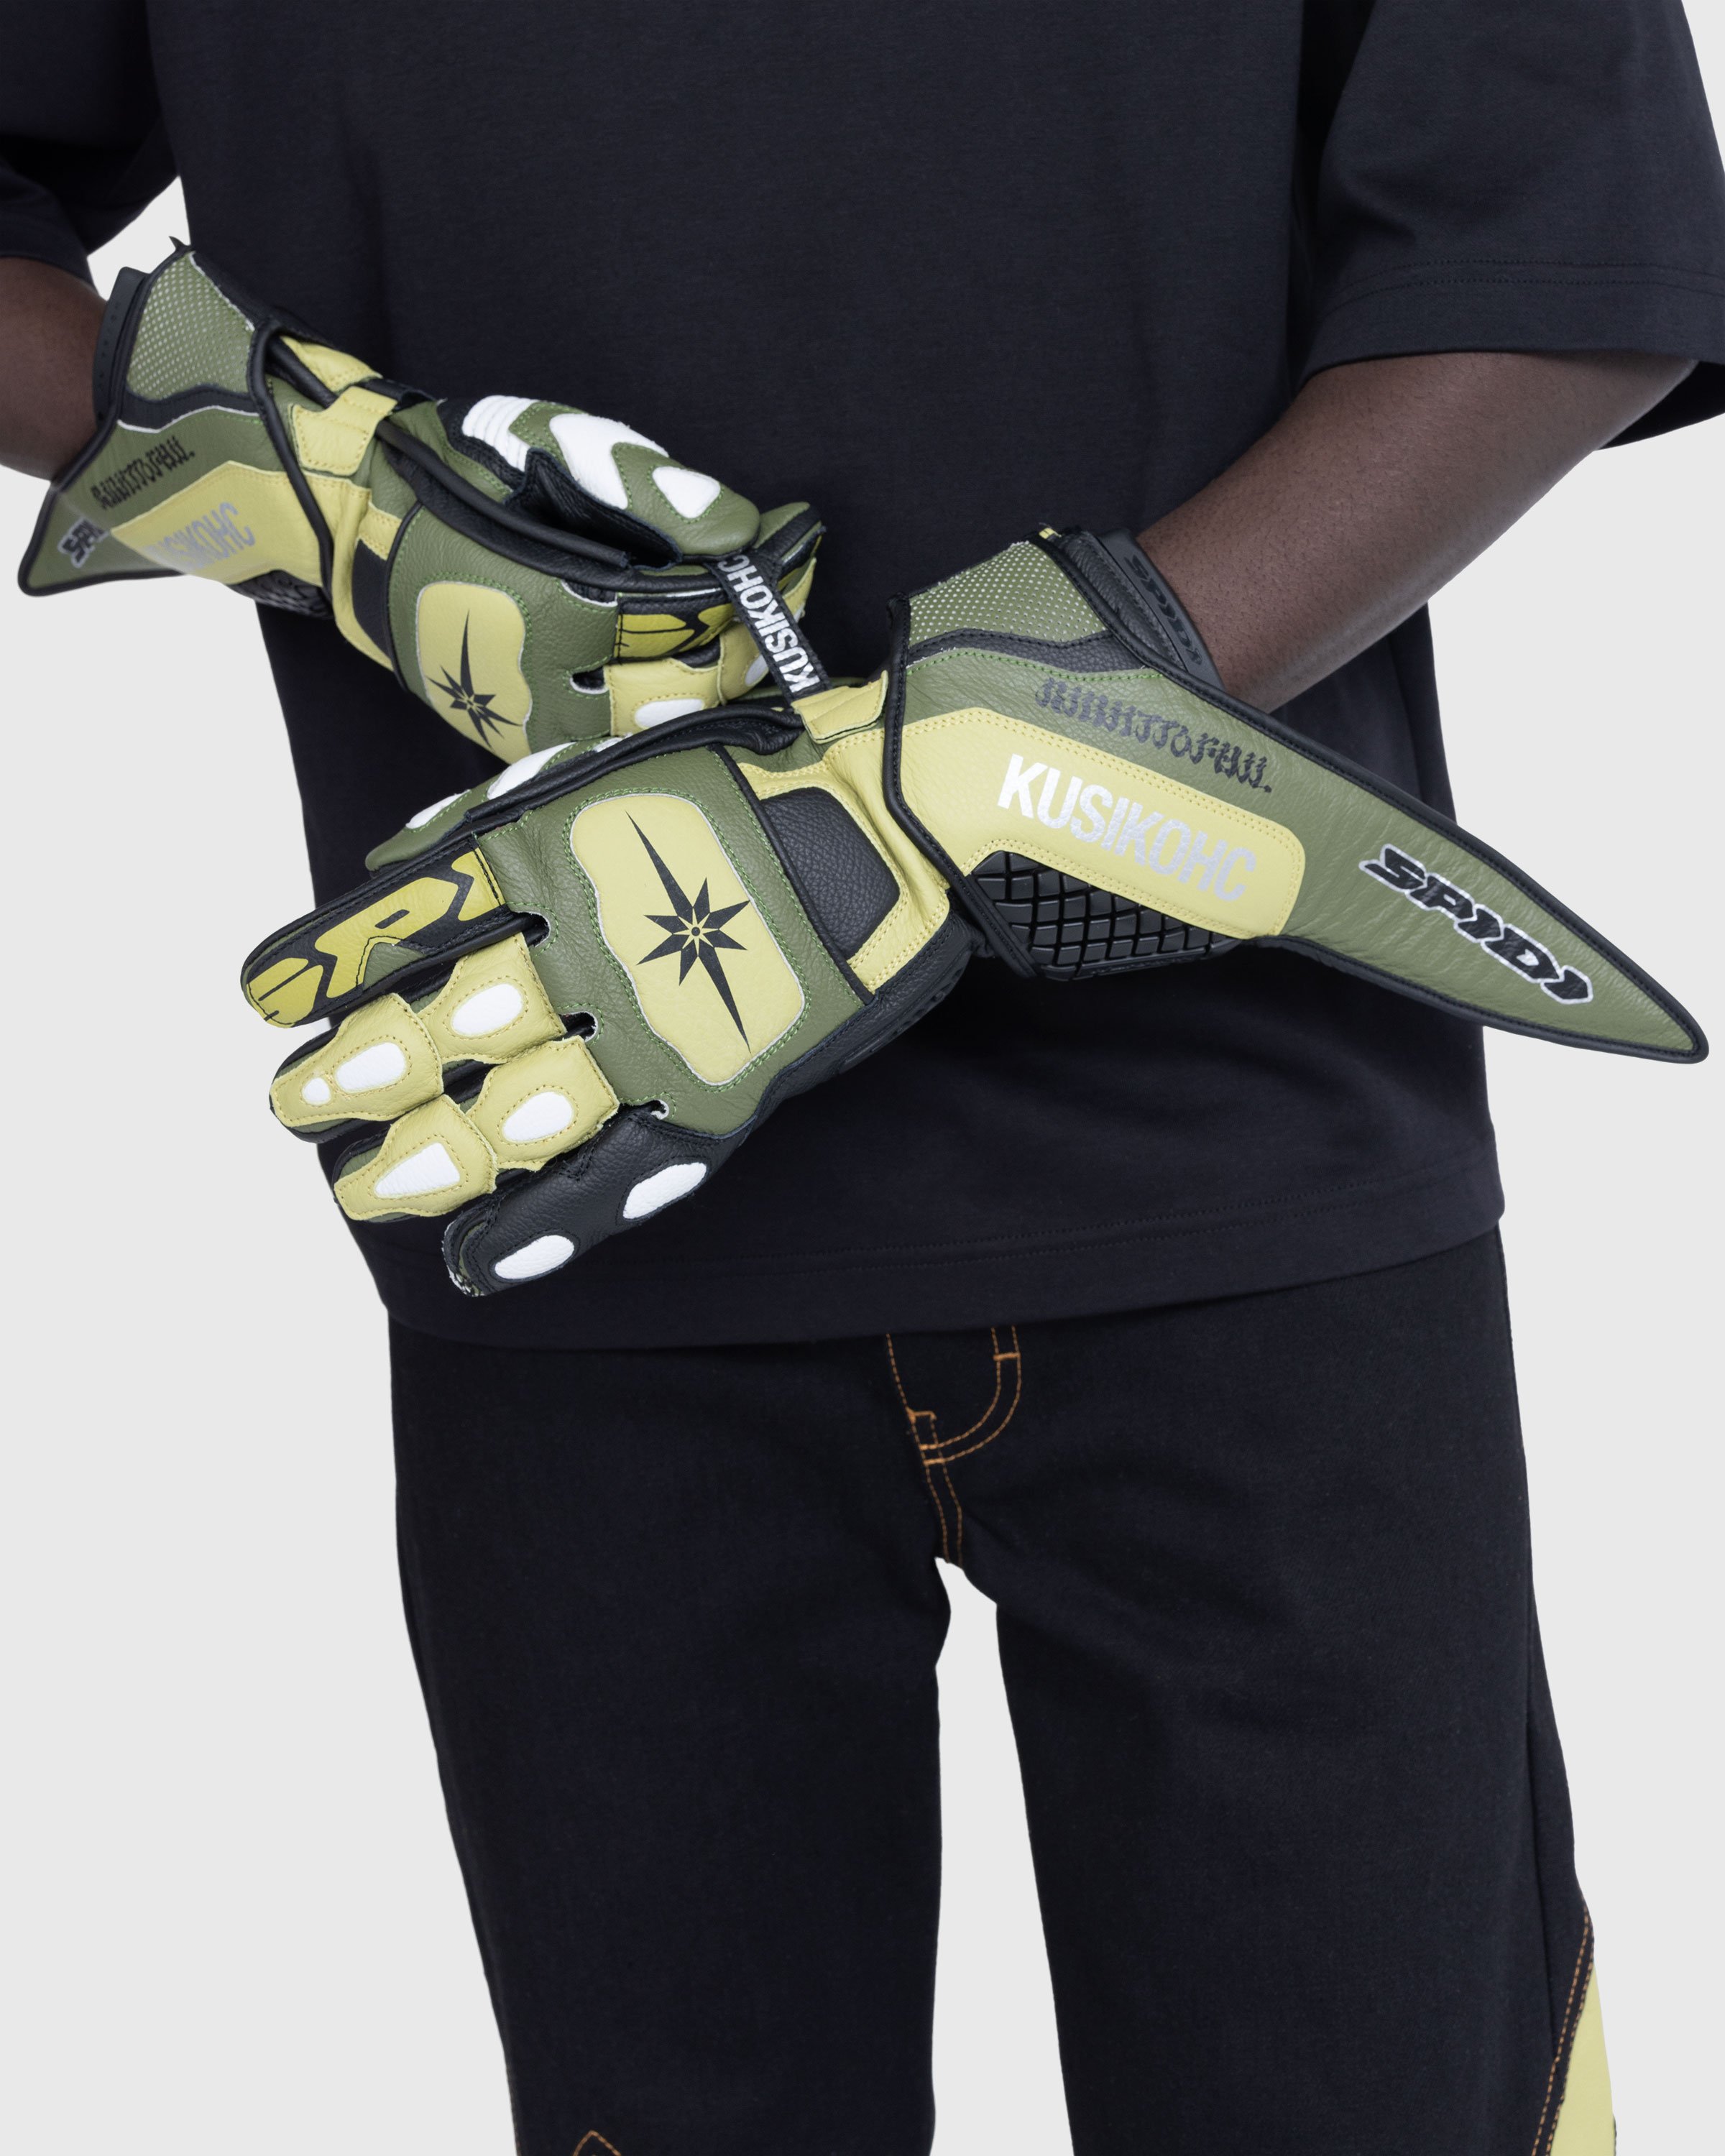 KUSIKOHC - Spidi Gloves Black/Dark Green - Accessories - Multi - Image 4